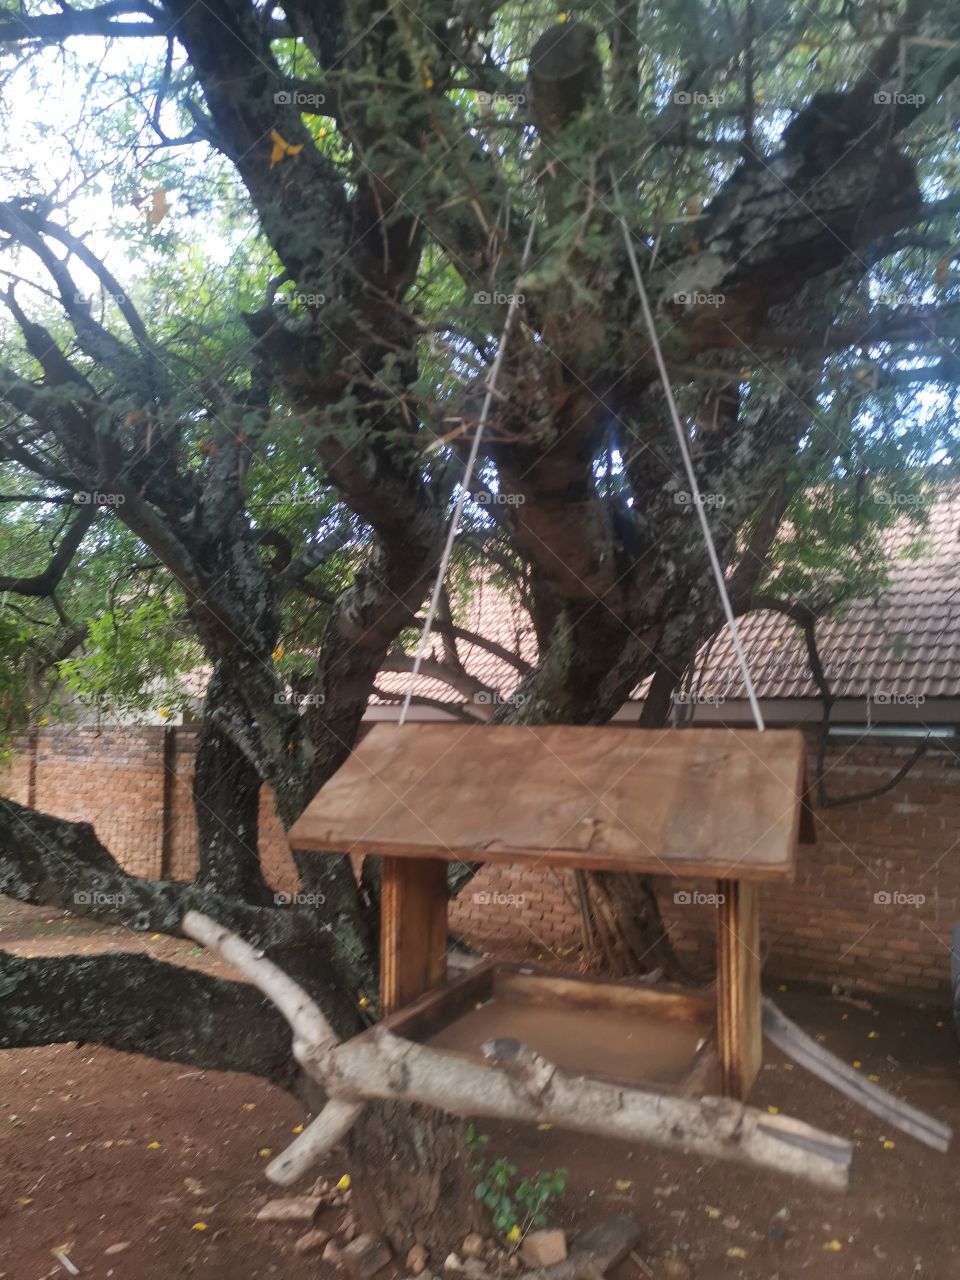 Bird tree house